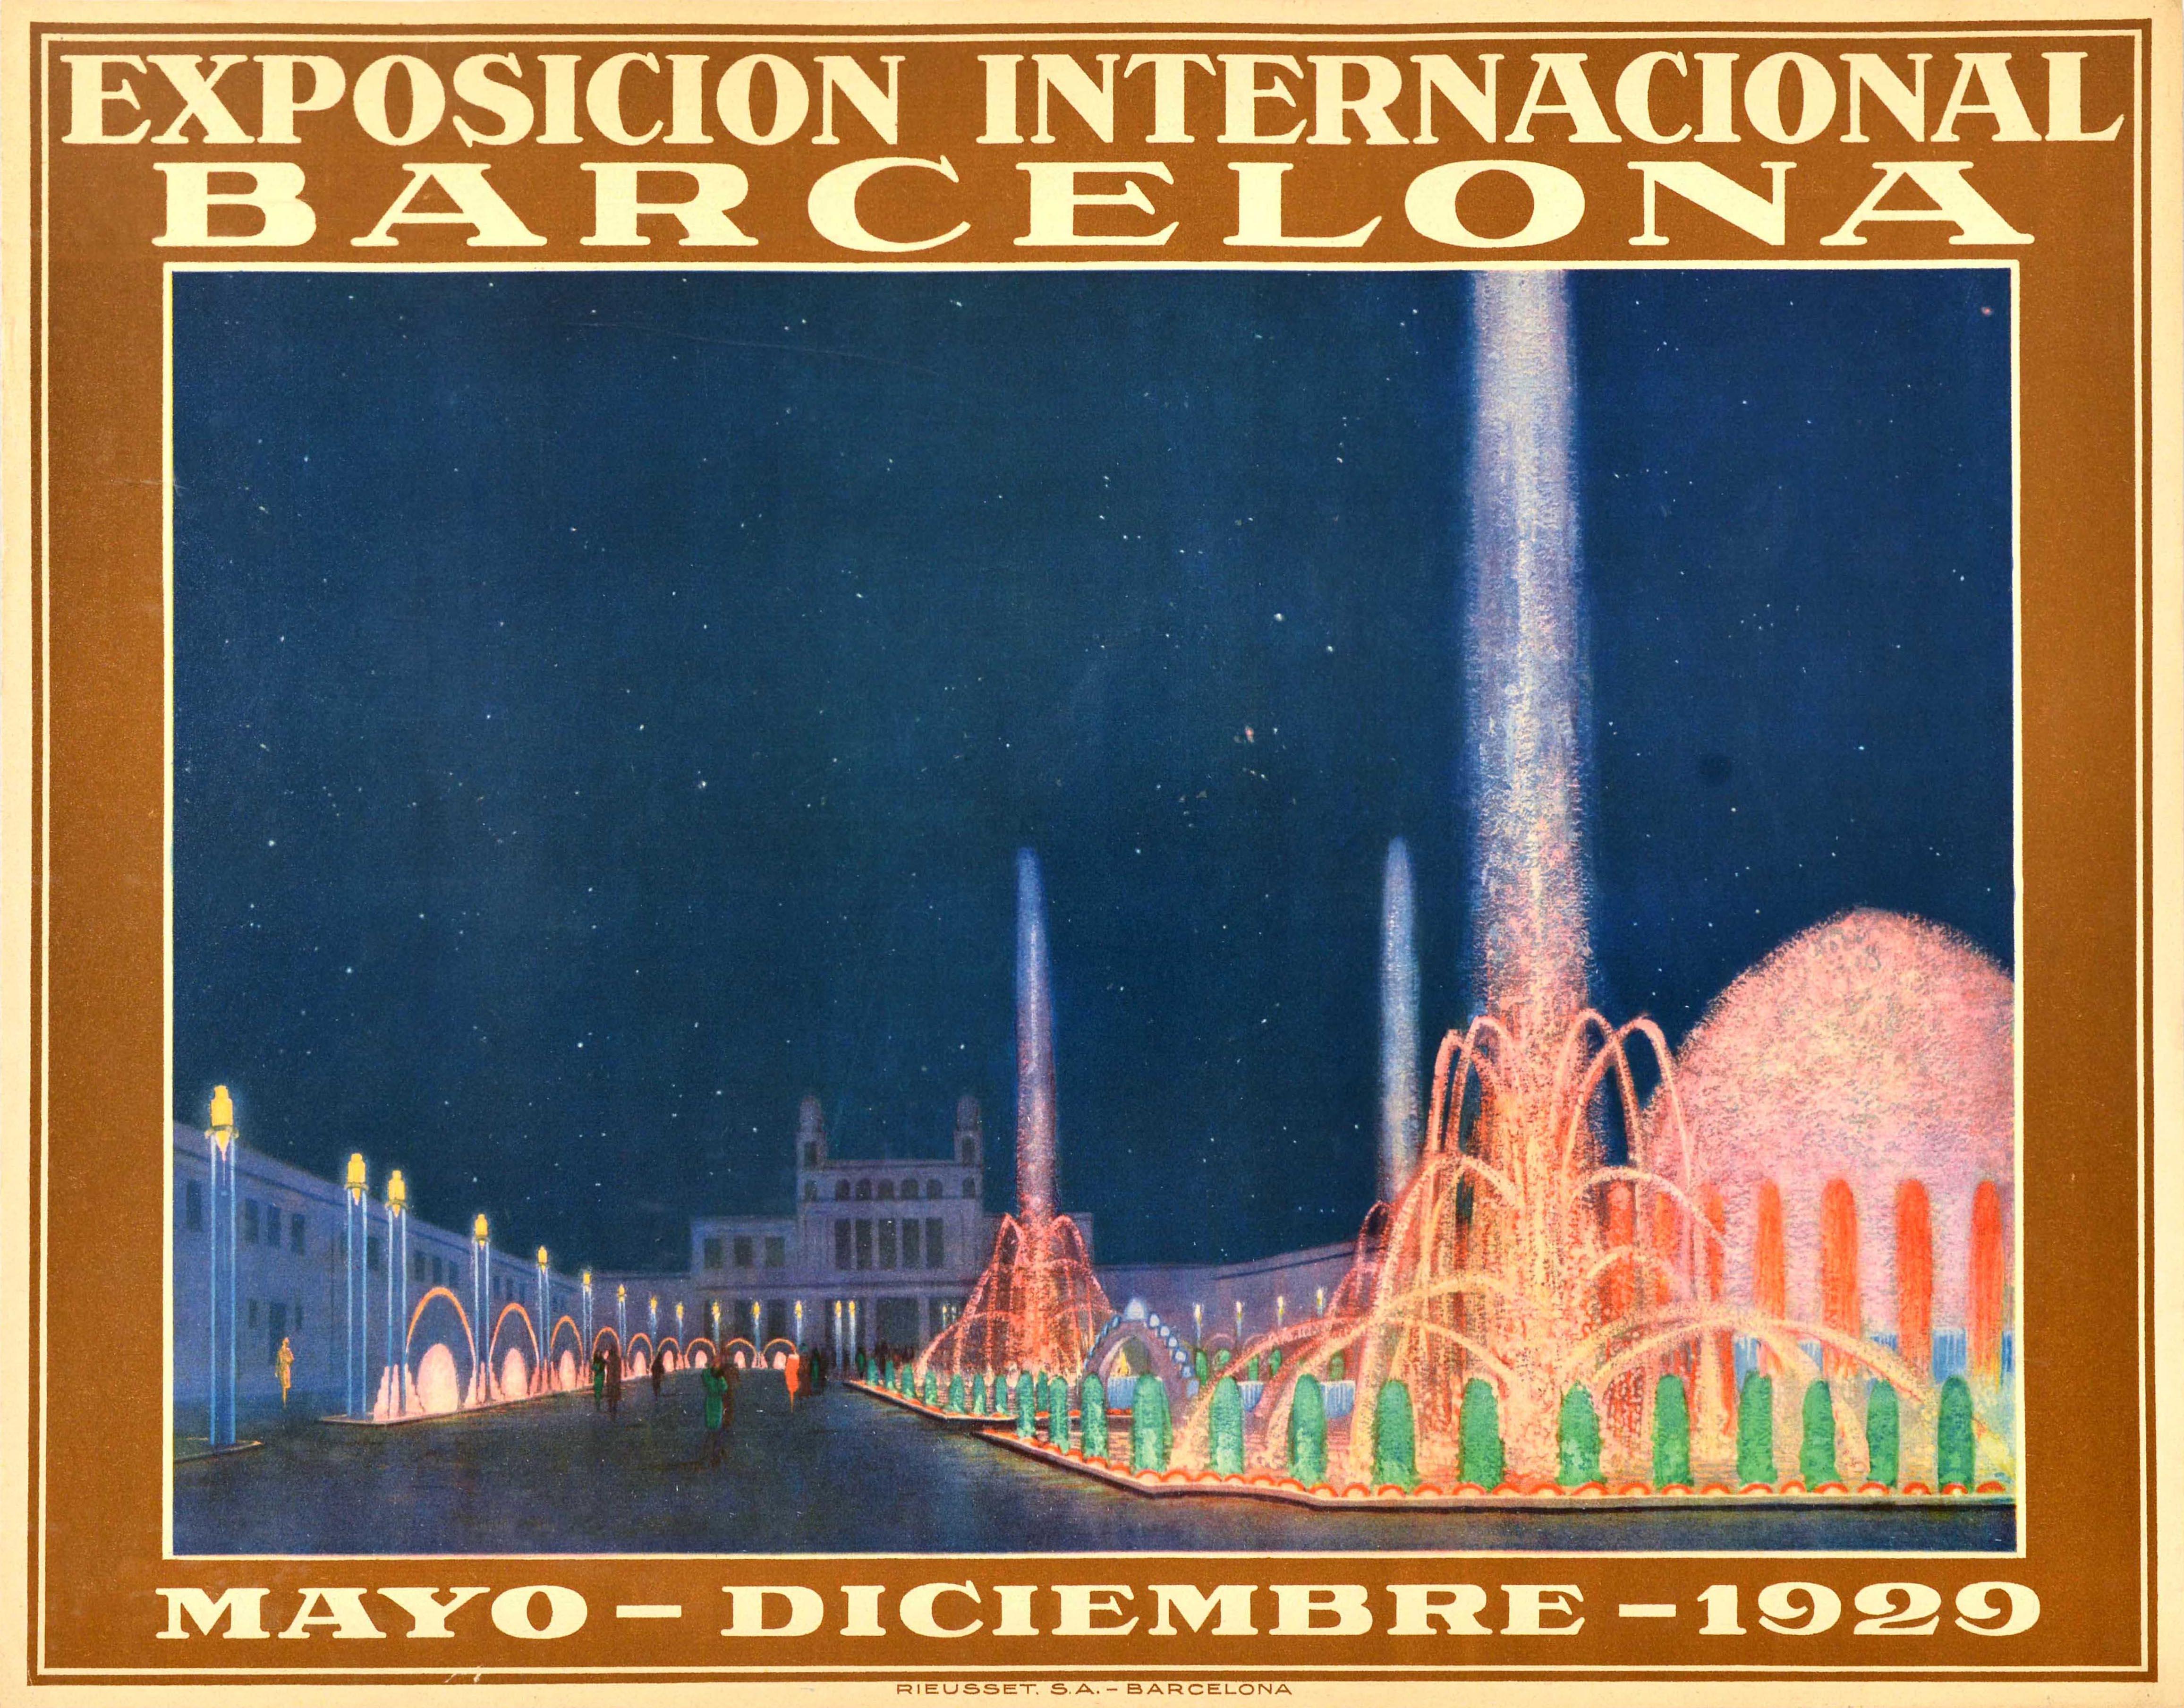 Unknown Print - Original Vintage Advertising Poster Barcelona International Exposition 1929 Fair